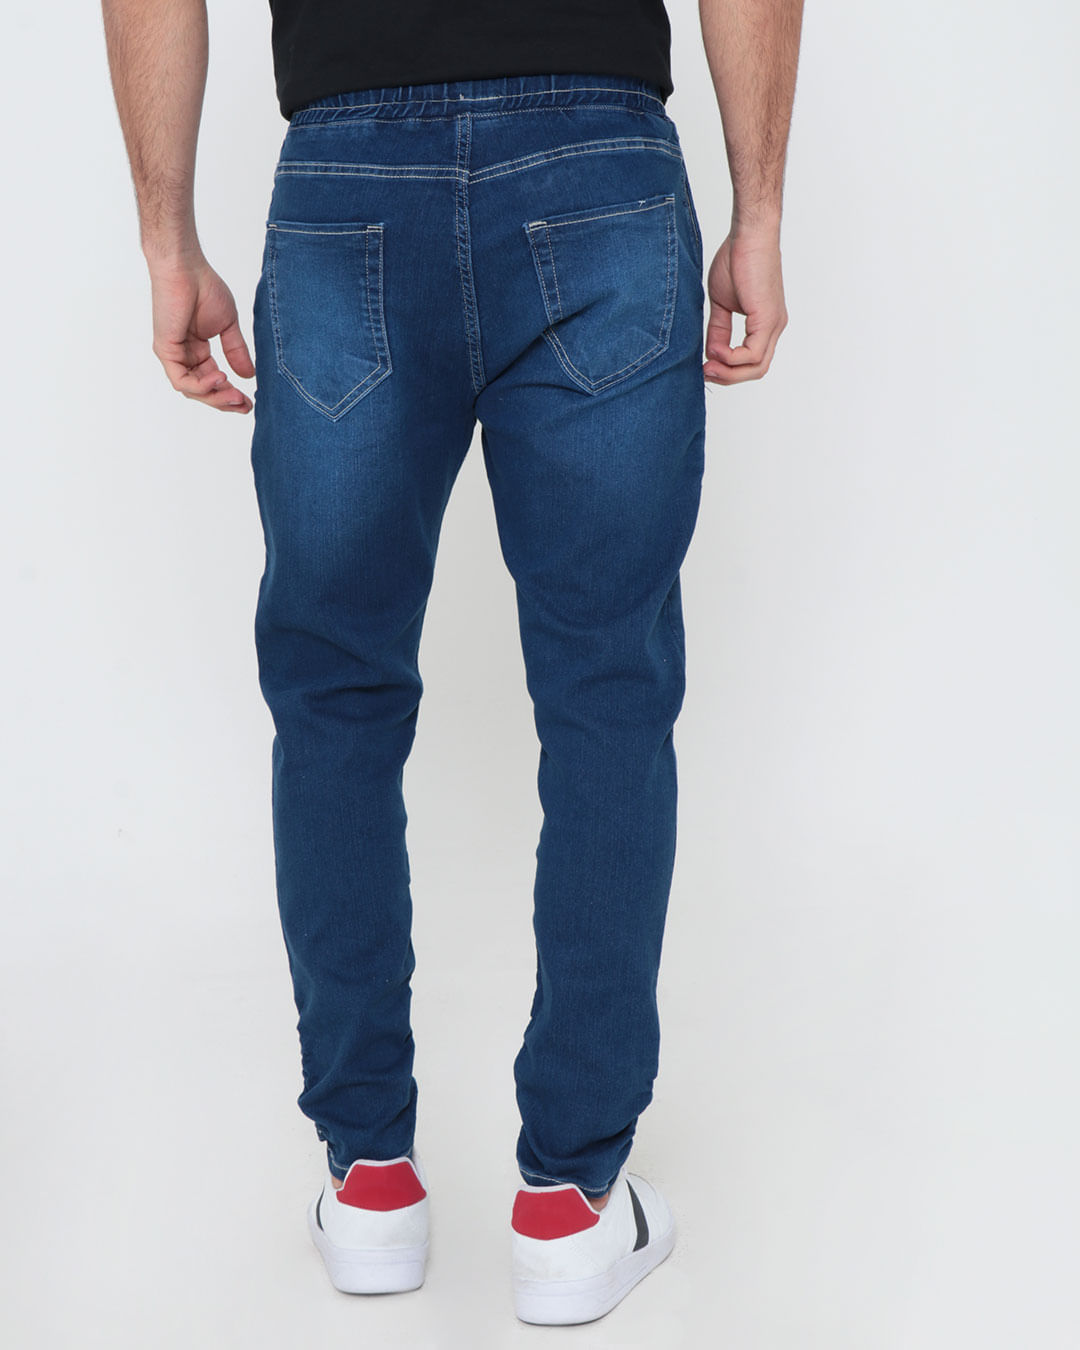 Calca-Jeans-Masculina-Delave-Azul-Marinho-